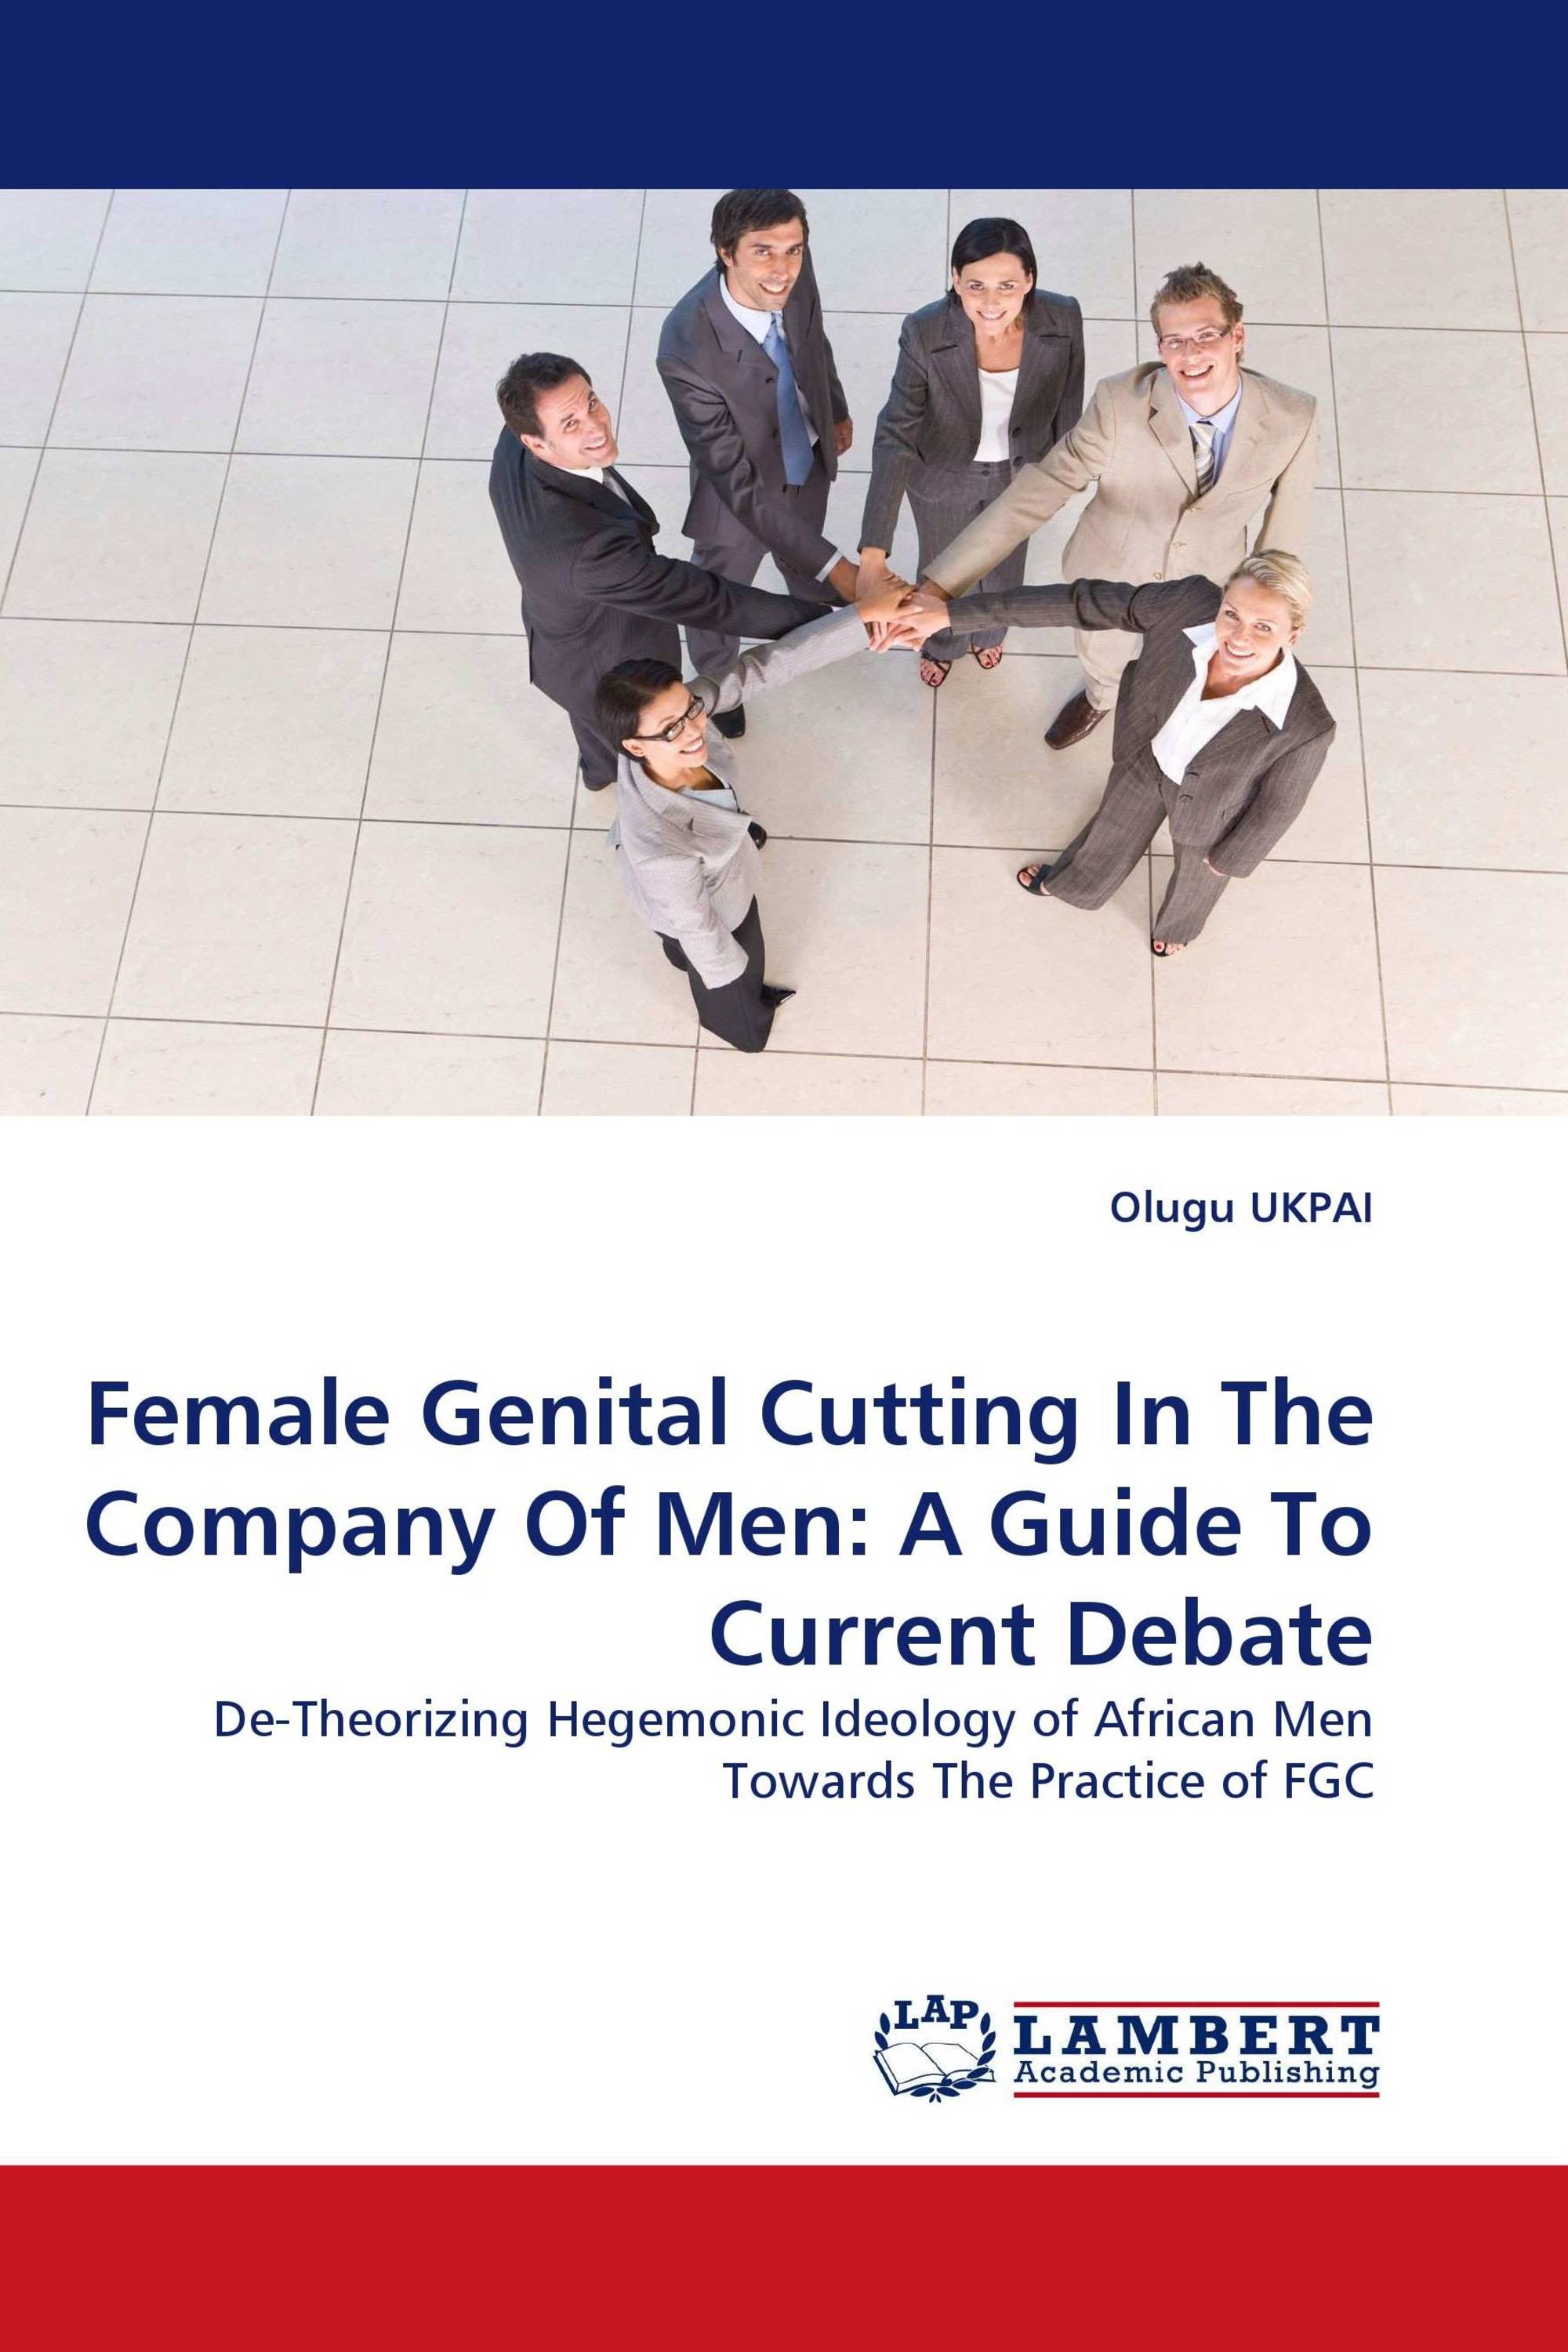 Female Genital Cutting In The Company Of Men: A Guide To Current Debate